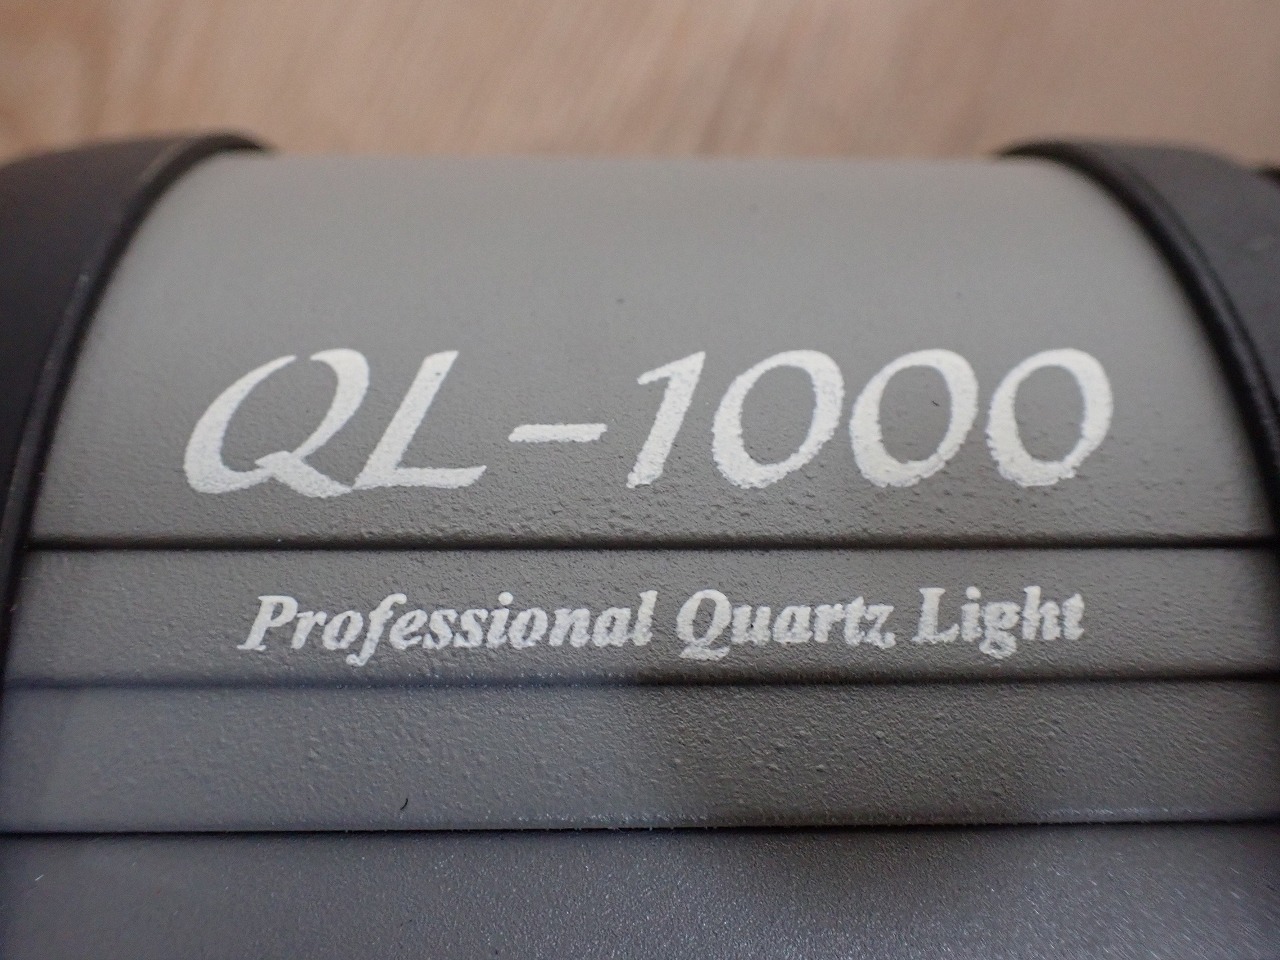 QL-1000